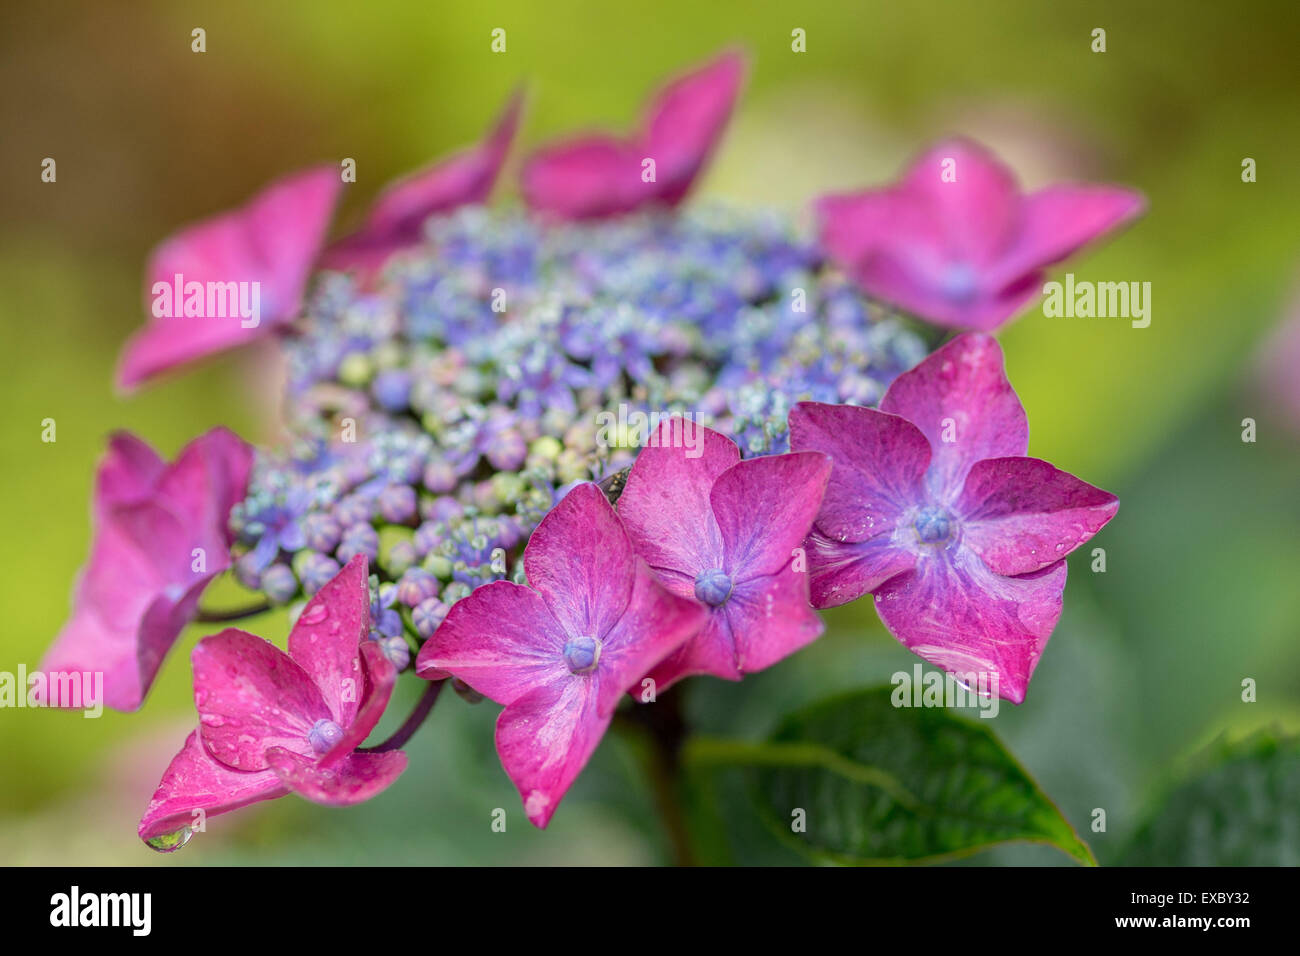 Purple bluish hydrangea blossom with raindrops Stock Photo